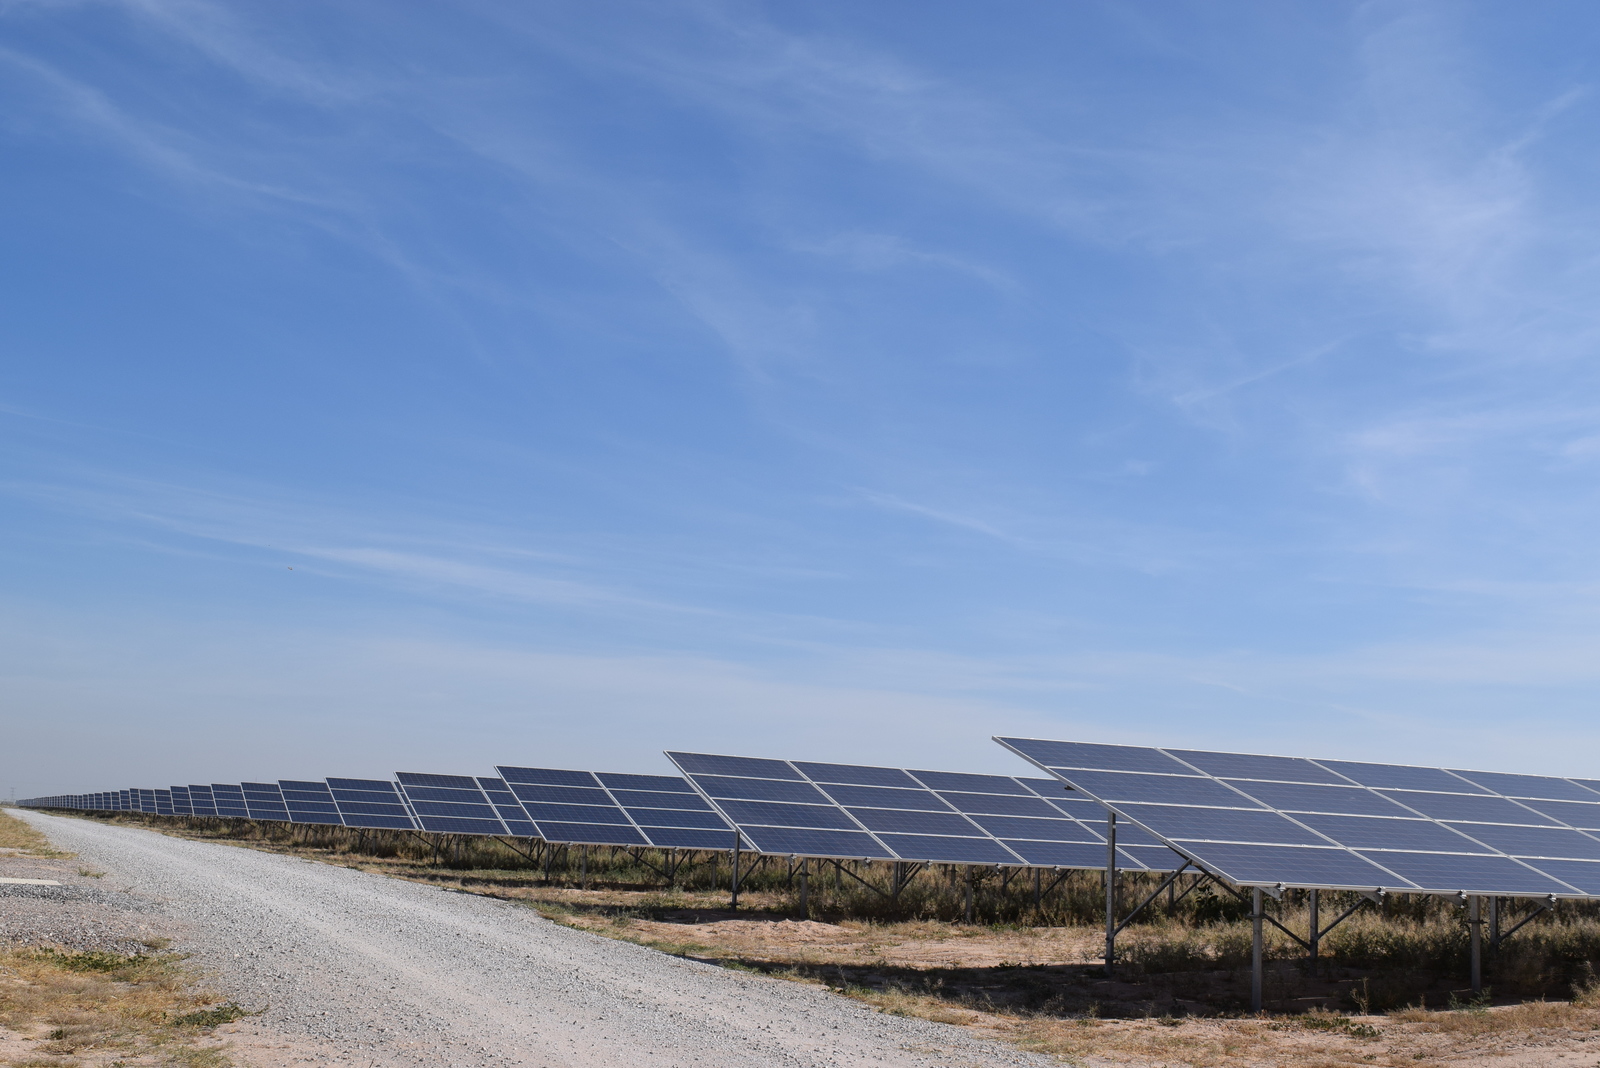 México podría recibir apoyos para acelerar sus procesos de tecnificación solar, señalan.